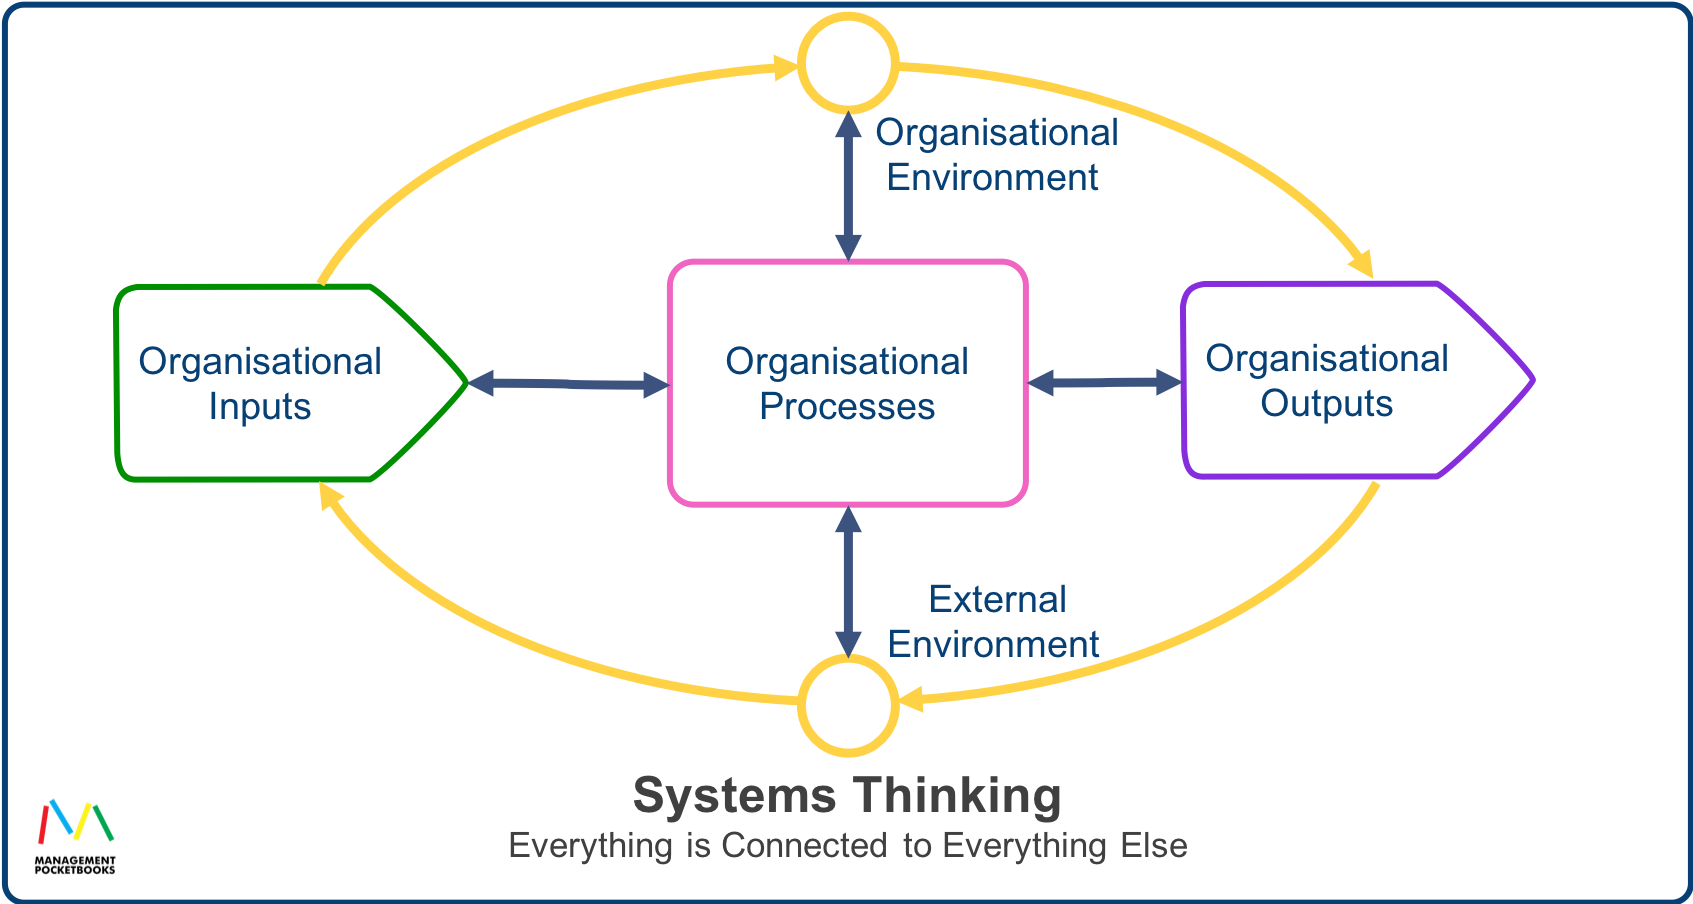 systems-thinking-management-pocketbooks